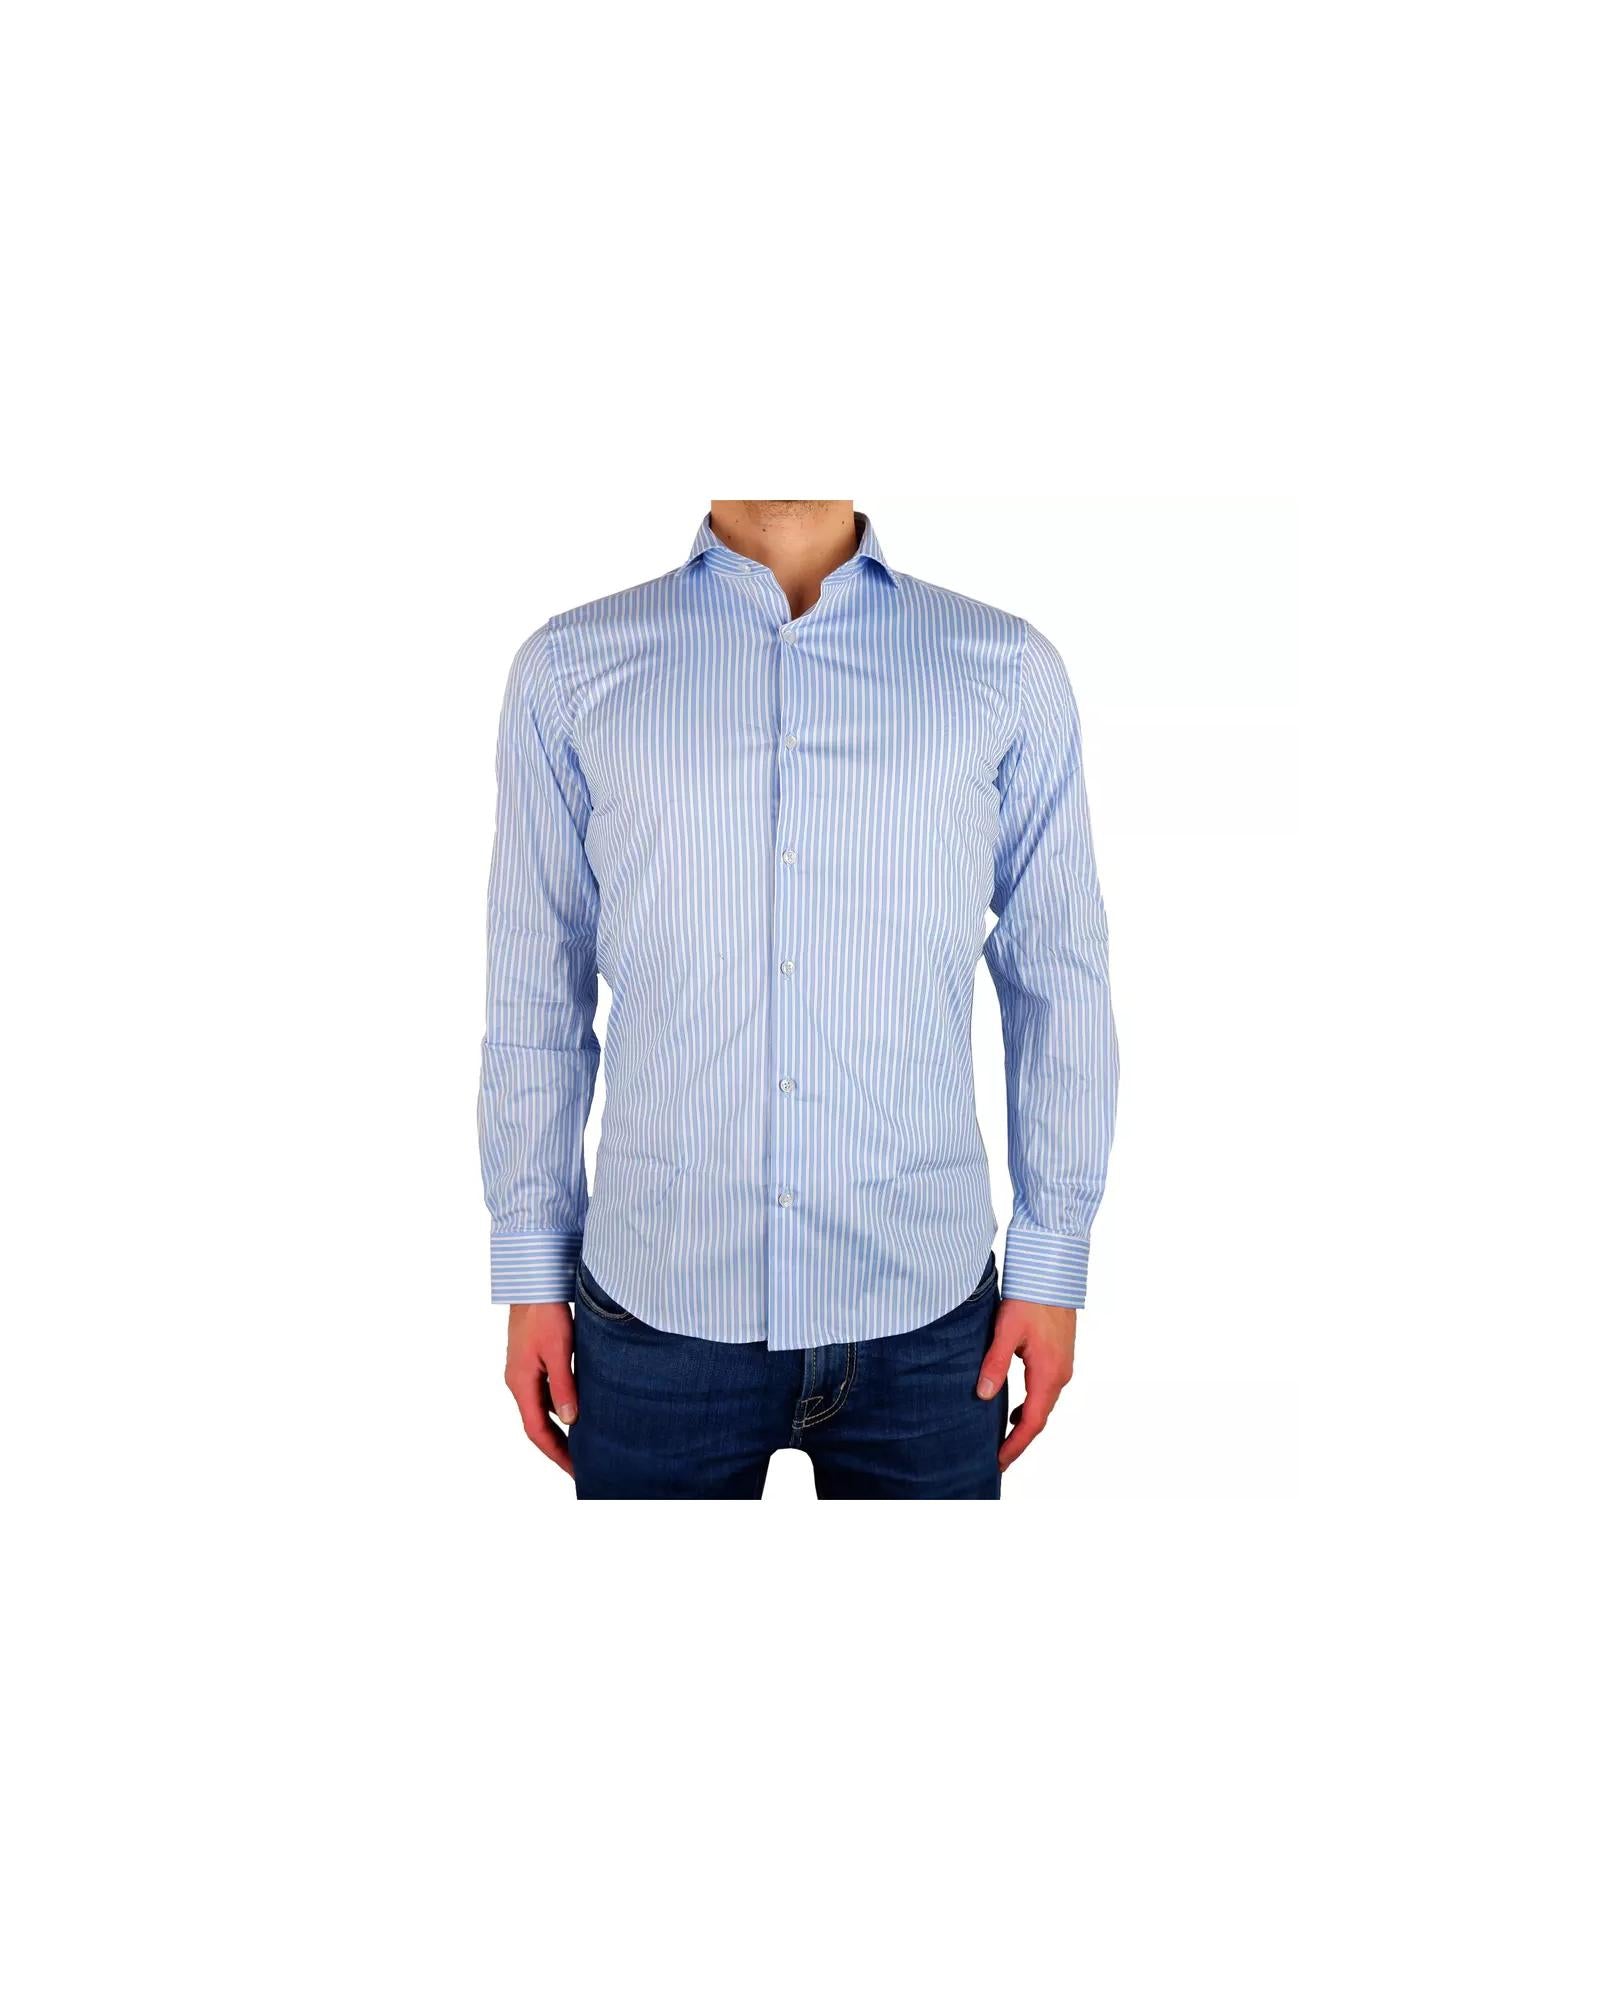 Milano Light Blue Striped Shirt - 100% Cotton 39 IT Men